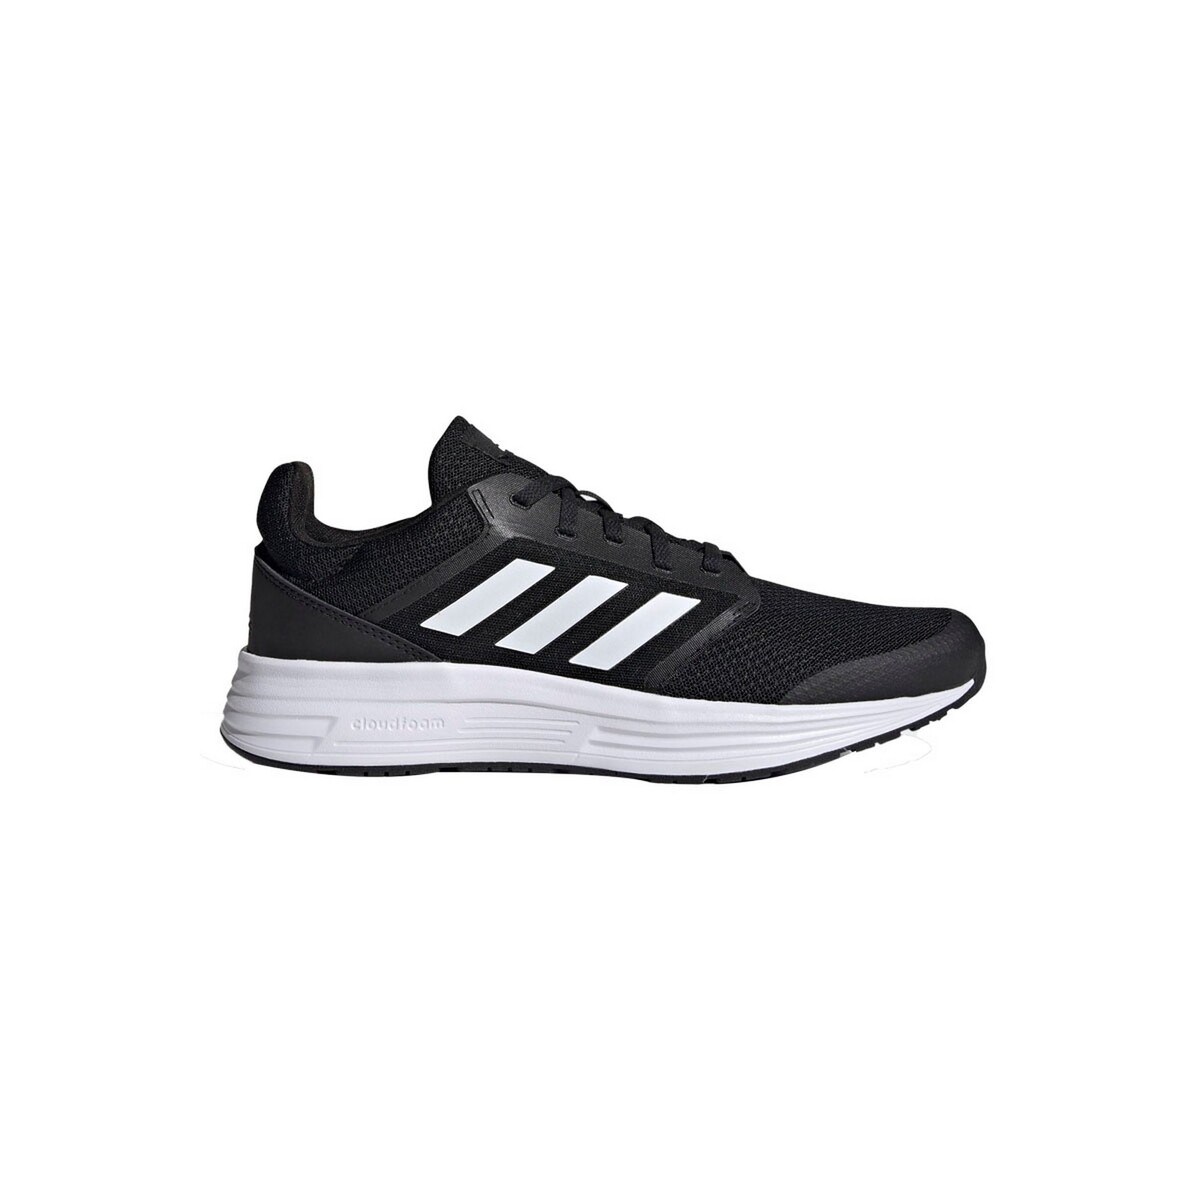 Adidas Mens Sports Shoes FW5717, 8